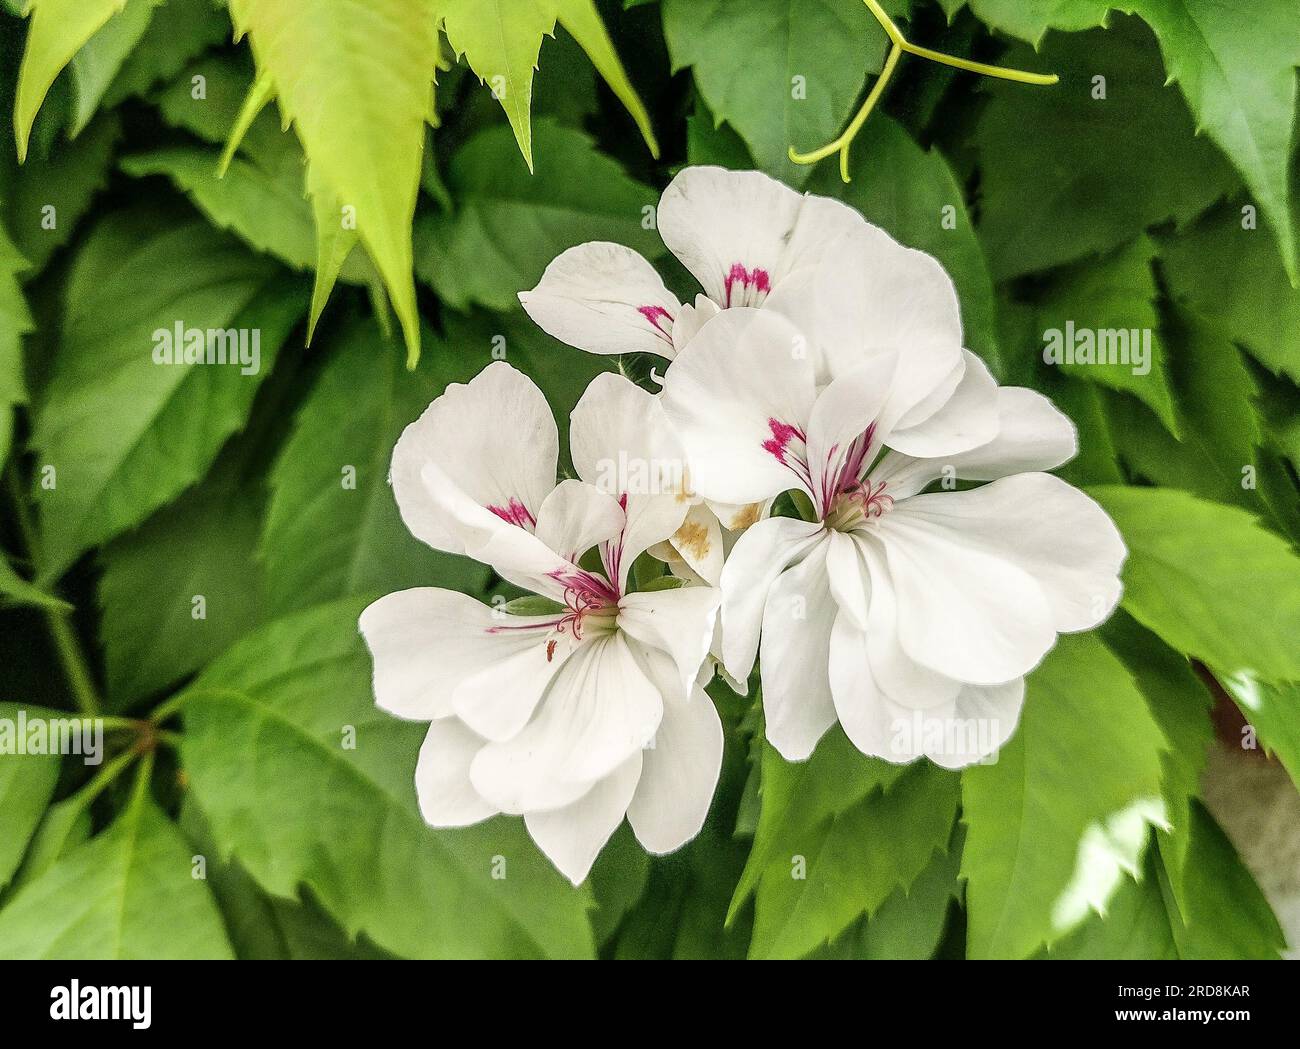 Ivy geranium flower. Macro view Stock Photo